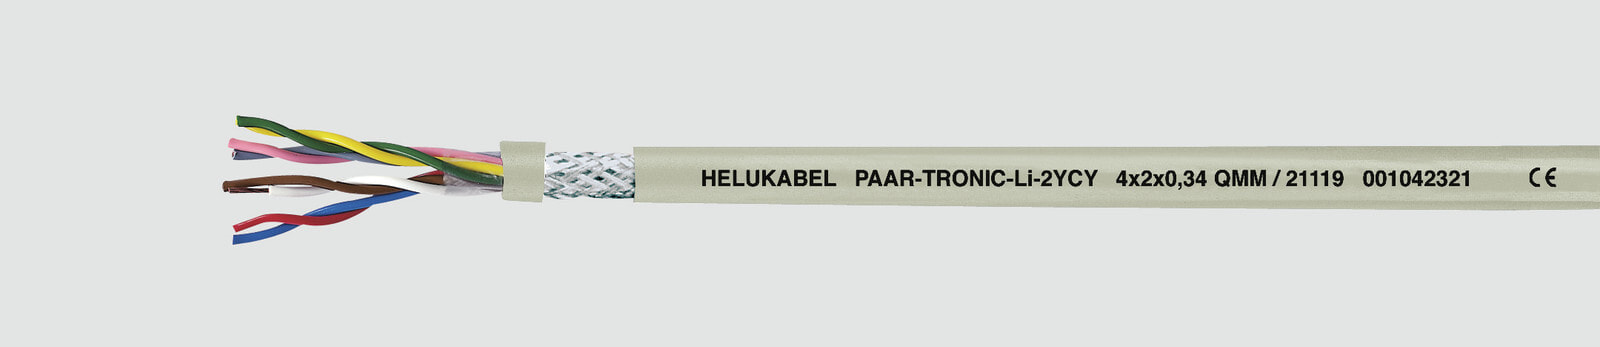 Helukabel PAAR-TRONIC-Li-2YCY - Low voltage cable - Polyvinyl chloride (PVC) - Polyethylene (PE) - Cooper - 0.22 mm² - 38 kg/km